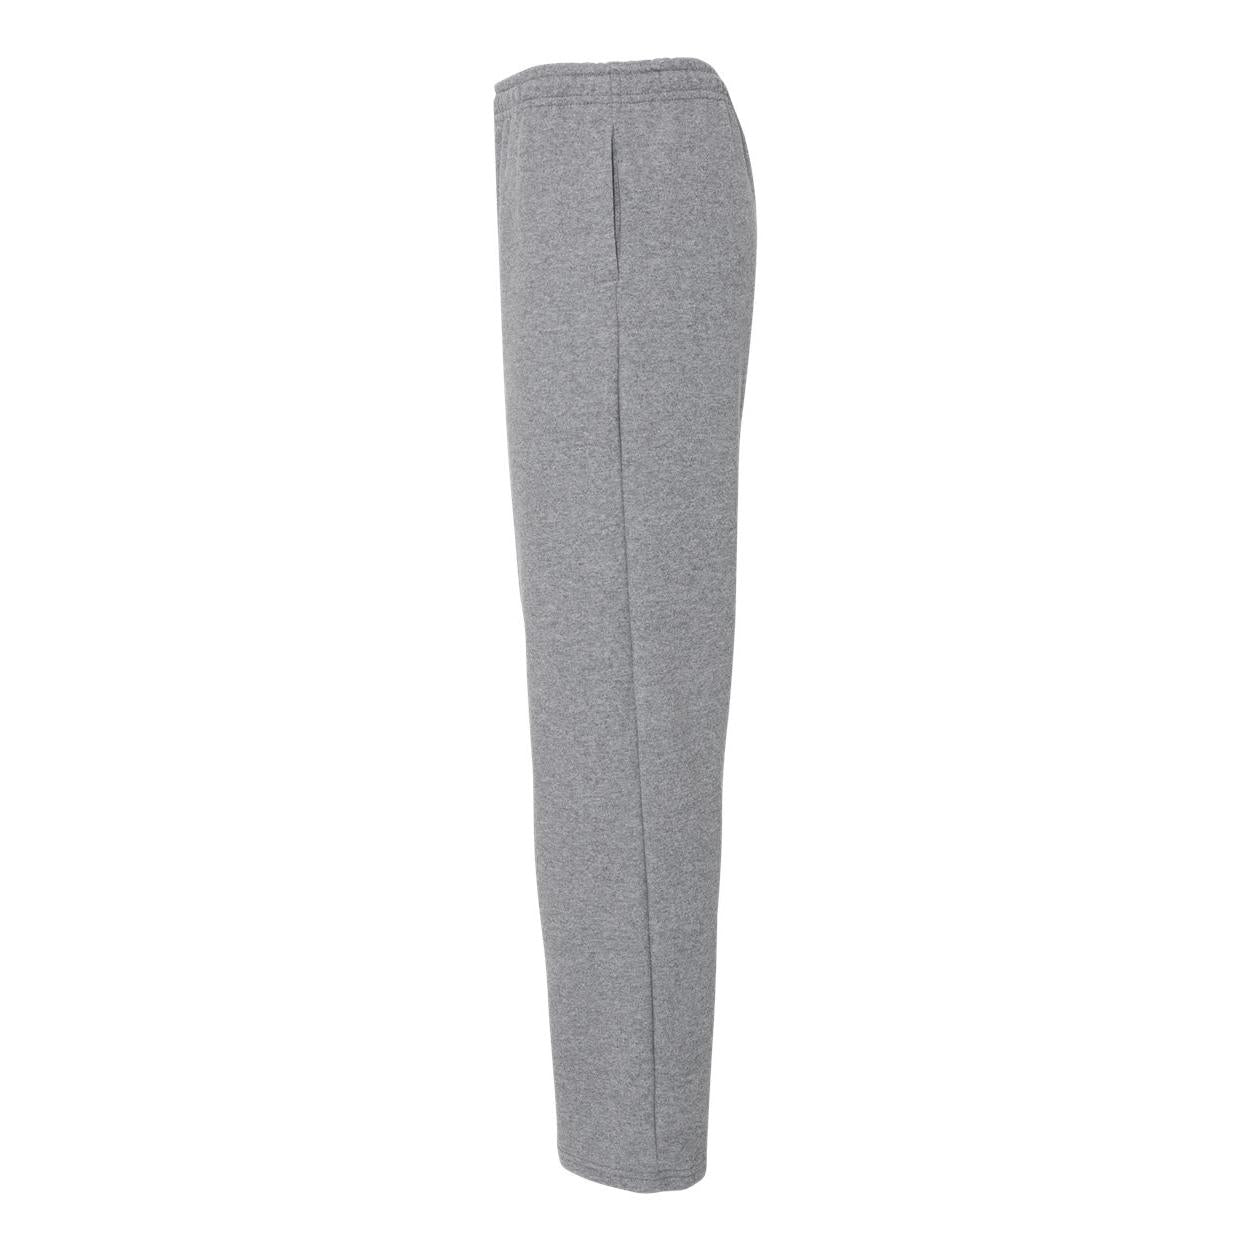 Gildan Heavy Blend™ Open-Bottom Sweatpants with Pockets - 18300